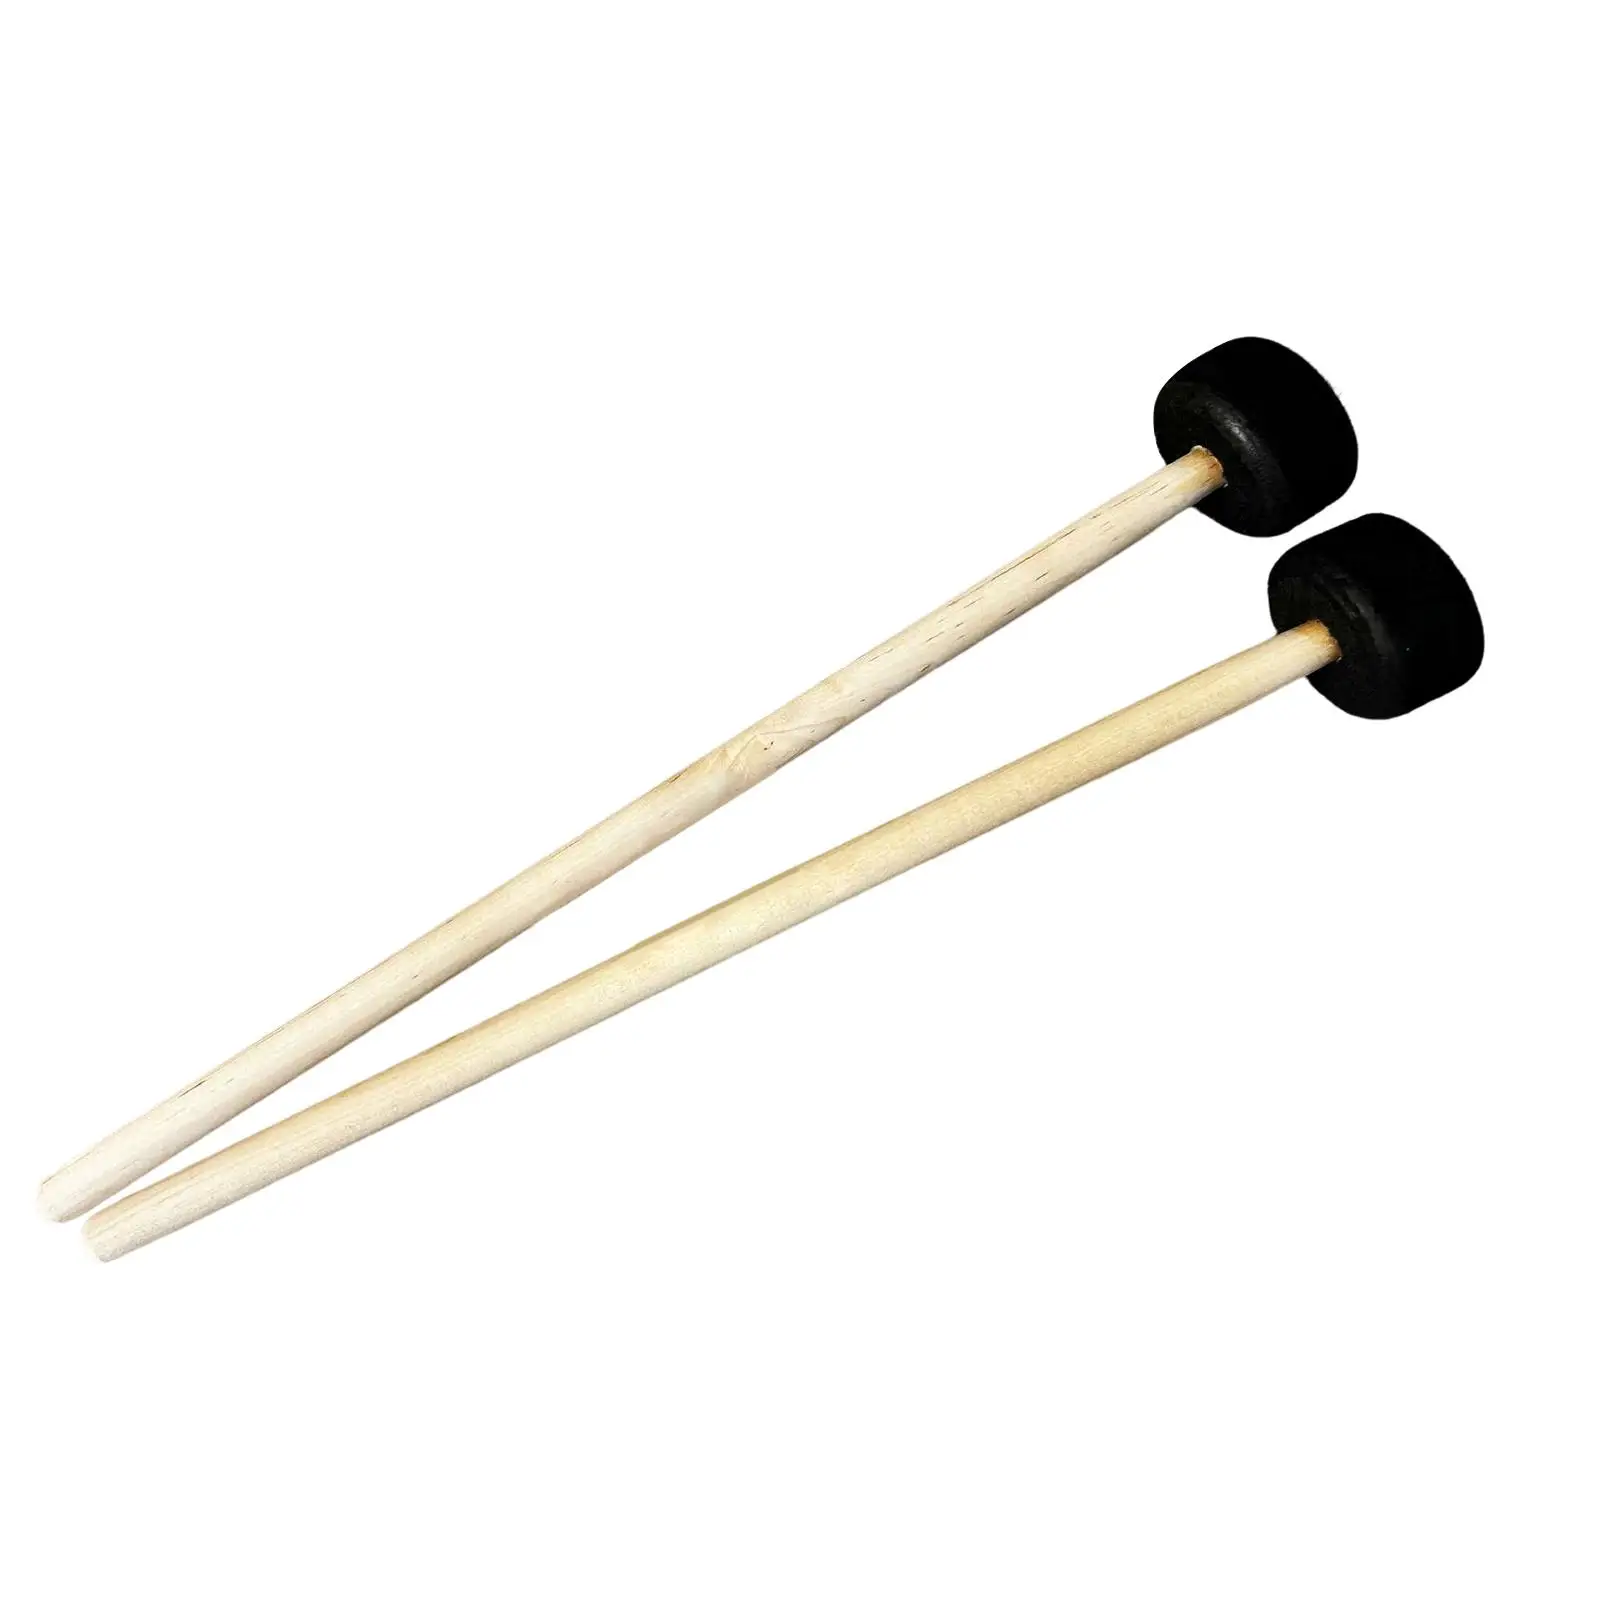 2x Drumsticks Multipurpose Percussion Accessories Wear Resistant Felt Head for